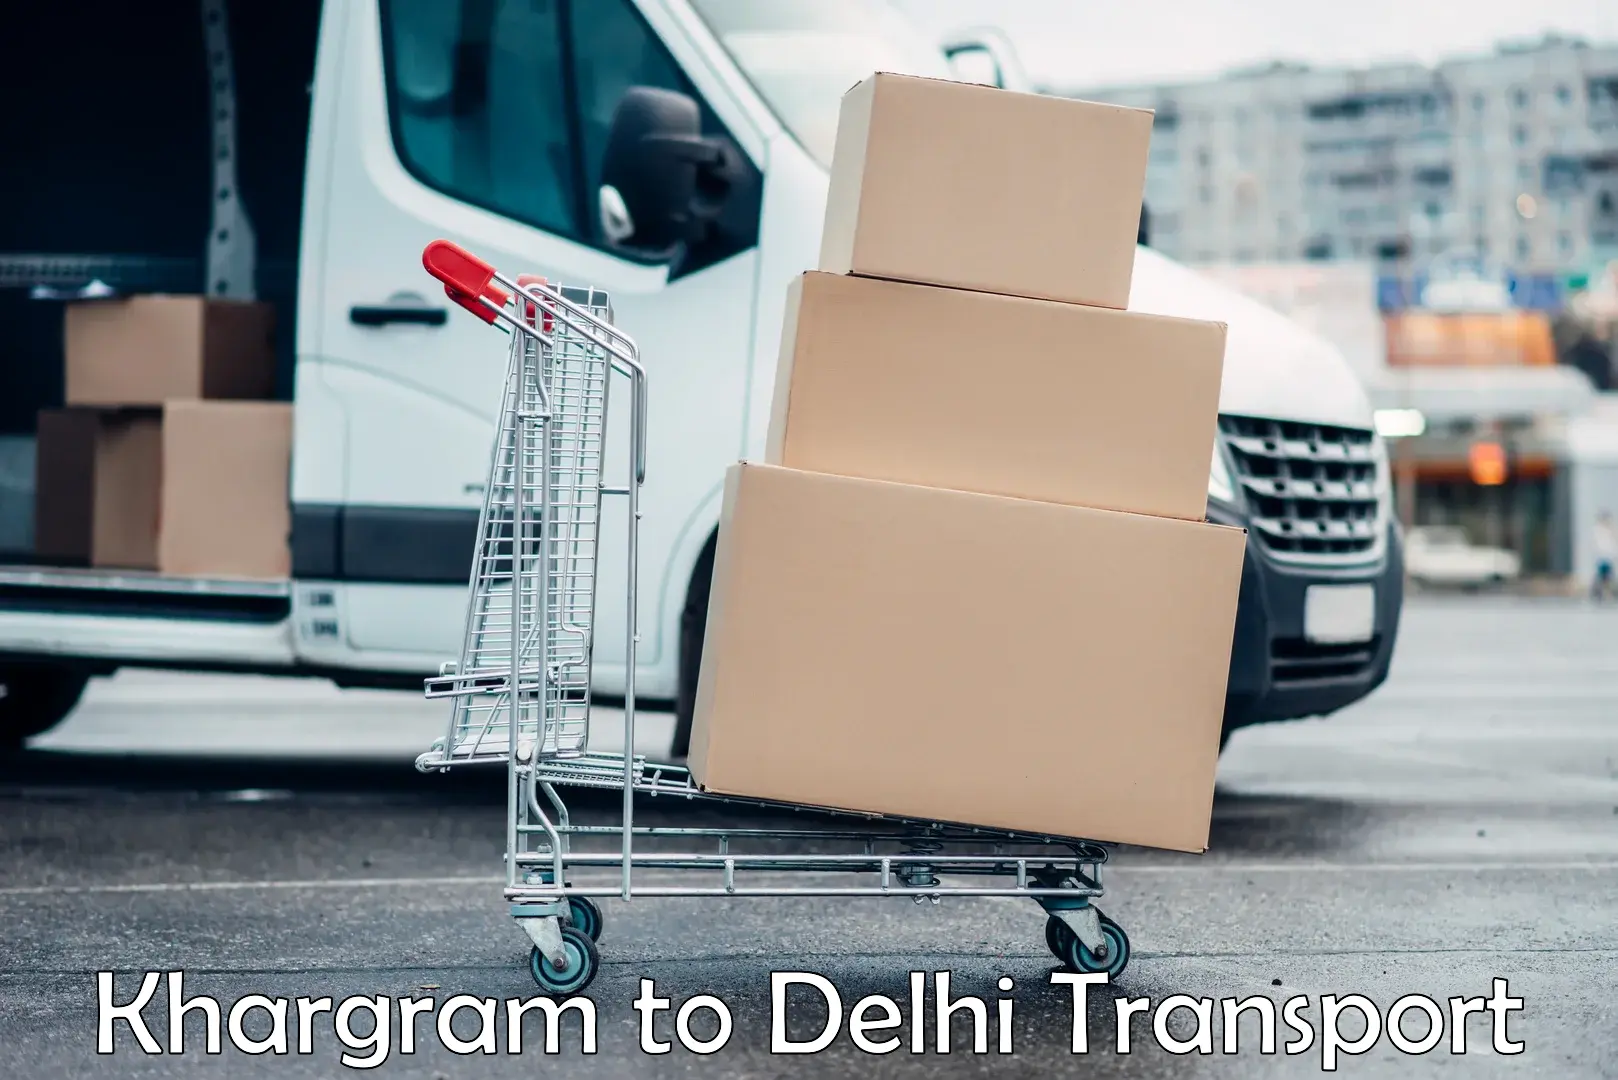 Cycle transportation service Khargram to Delhi